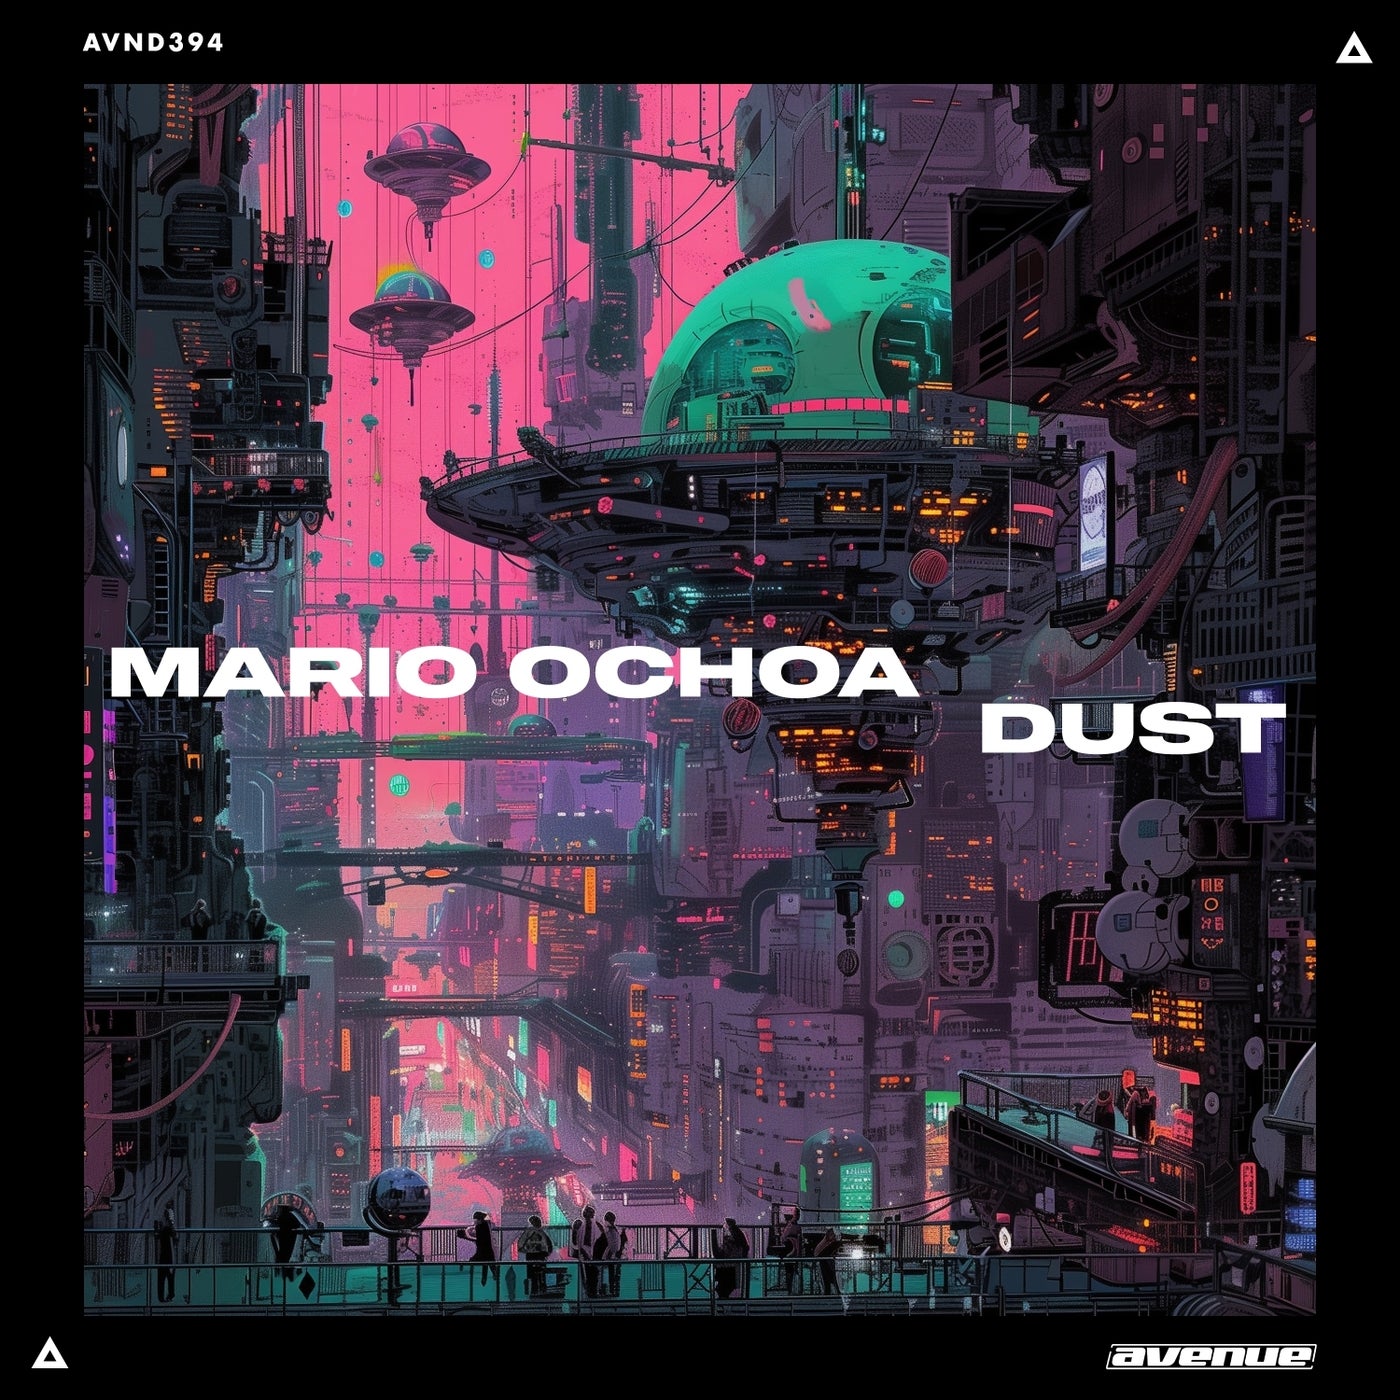 image cover: Mario Ochoa - Dust on Avenue Recordings